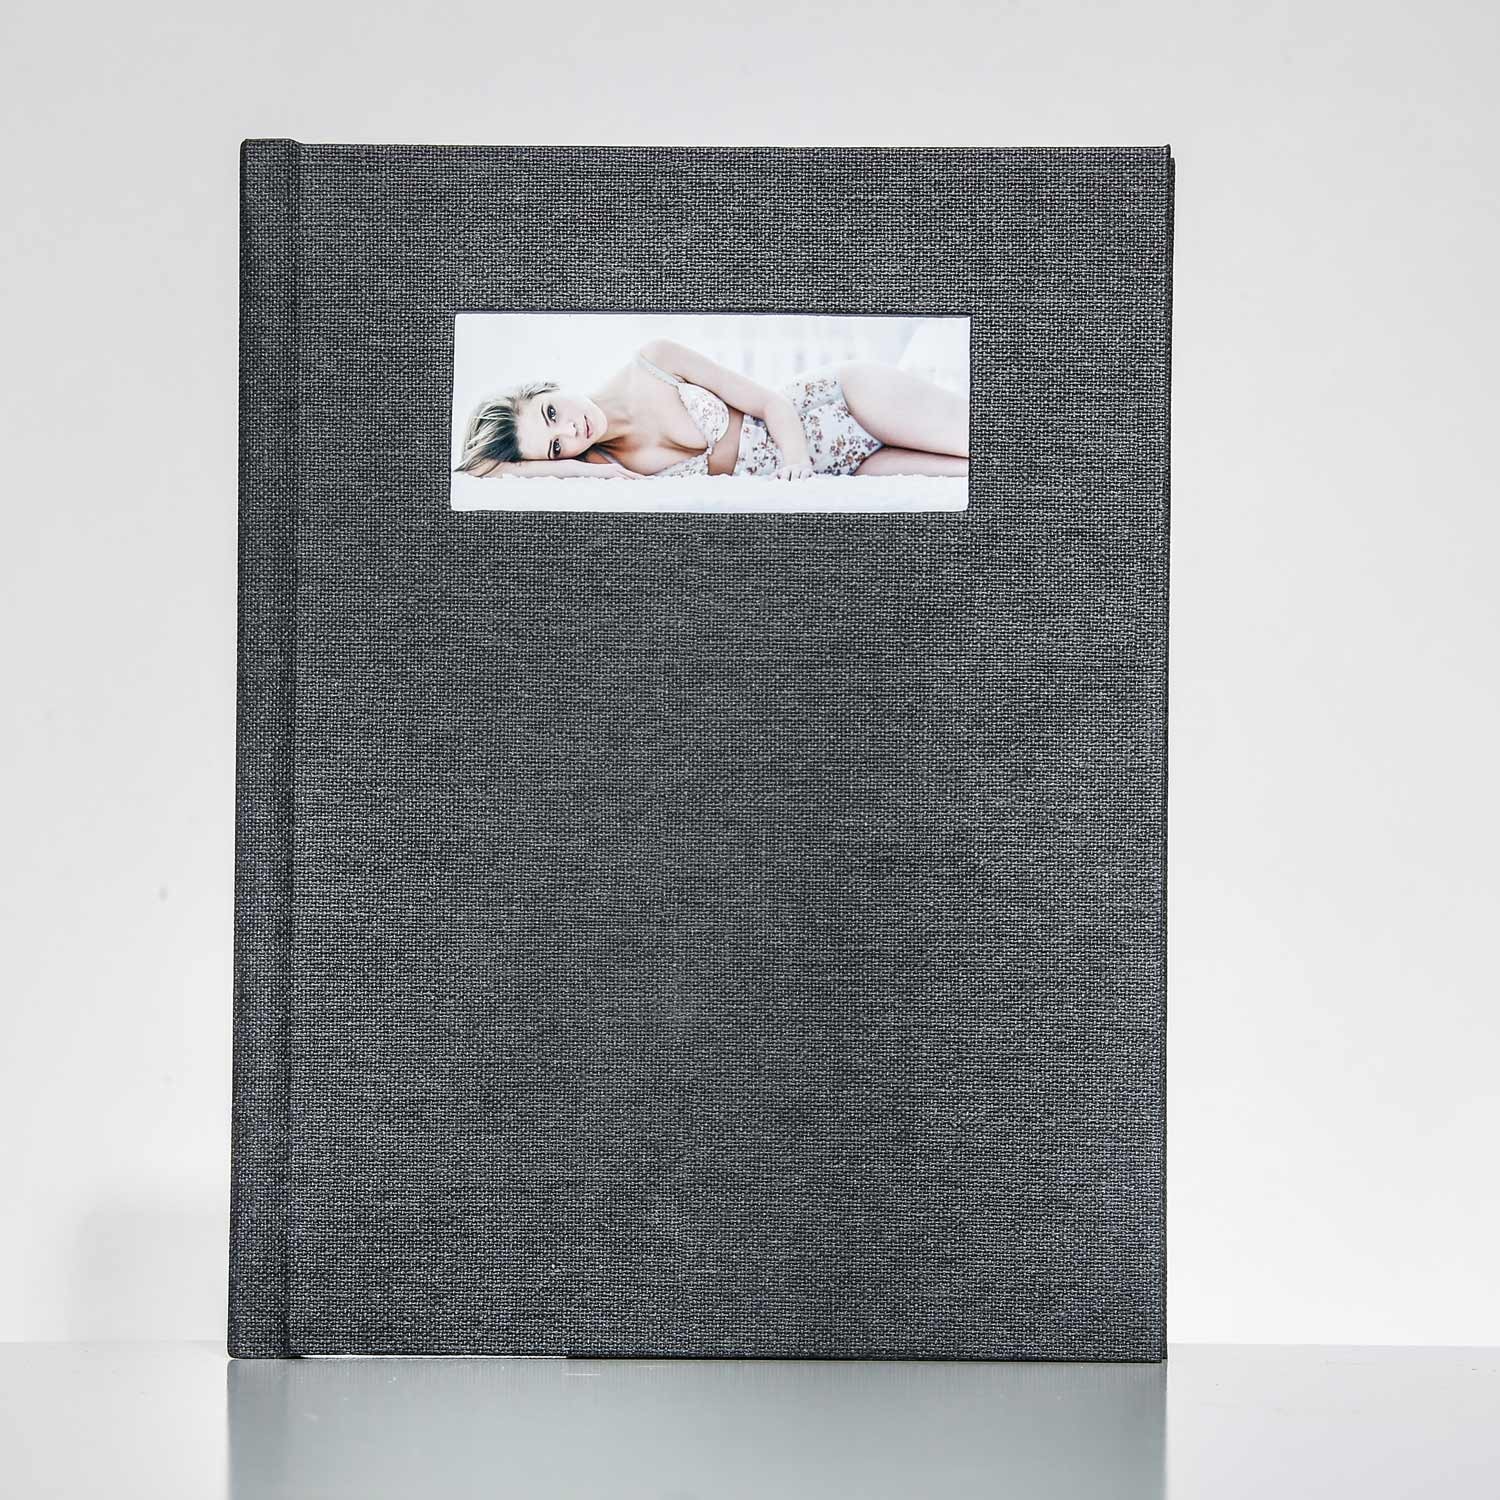 Silverbook 22,5x30cm with Landscape Window